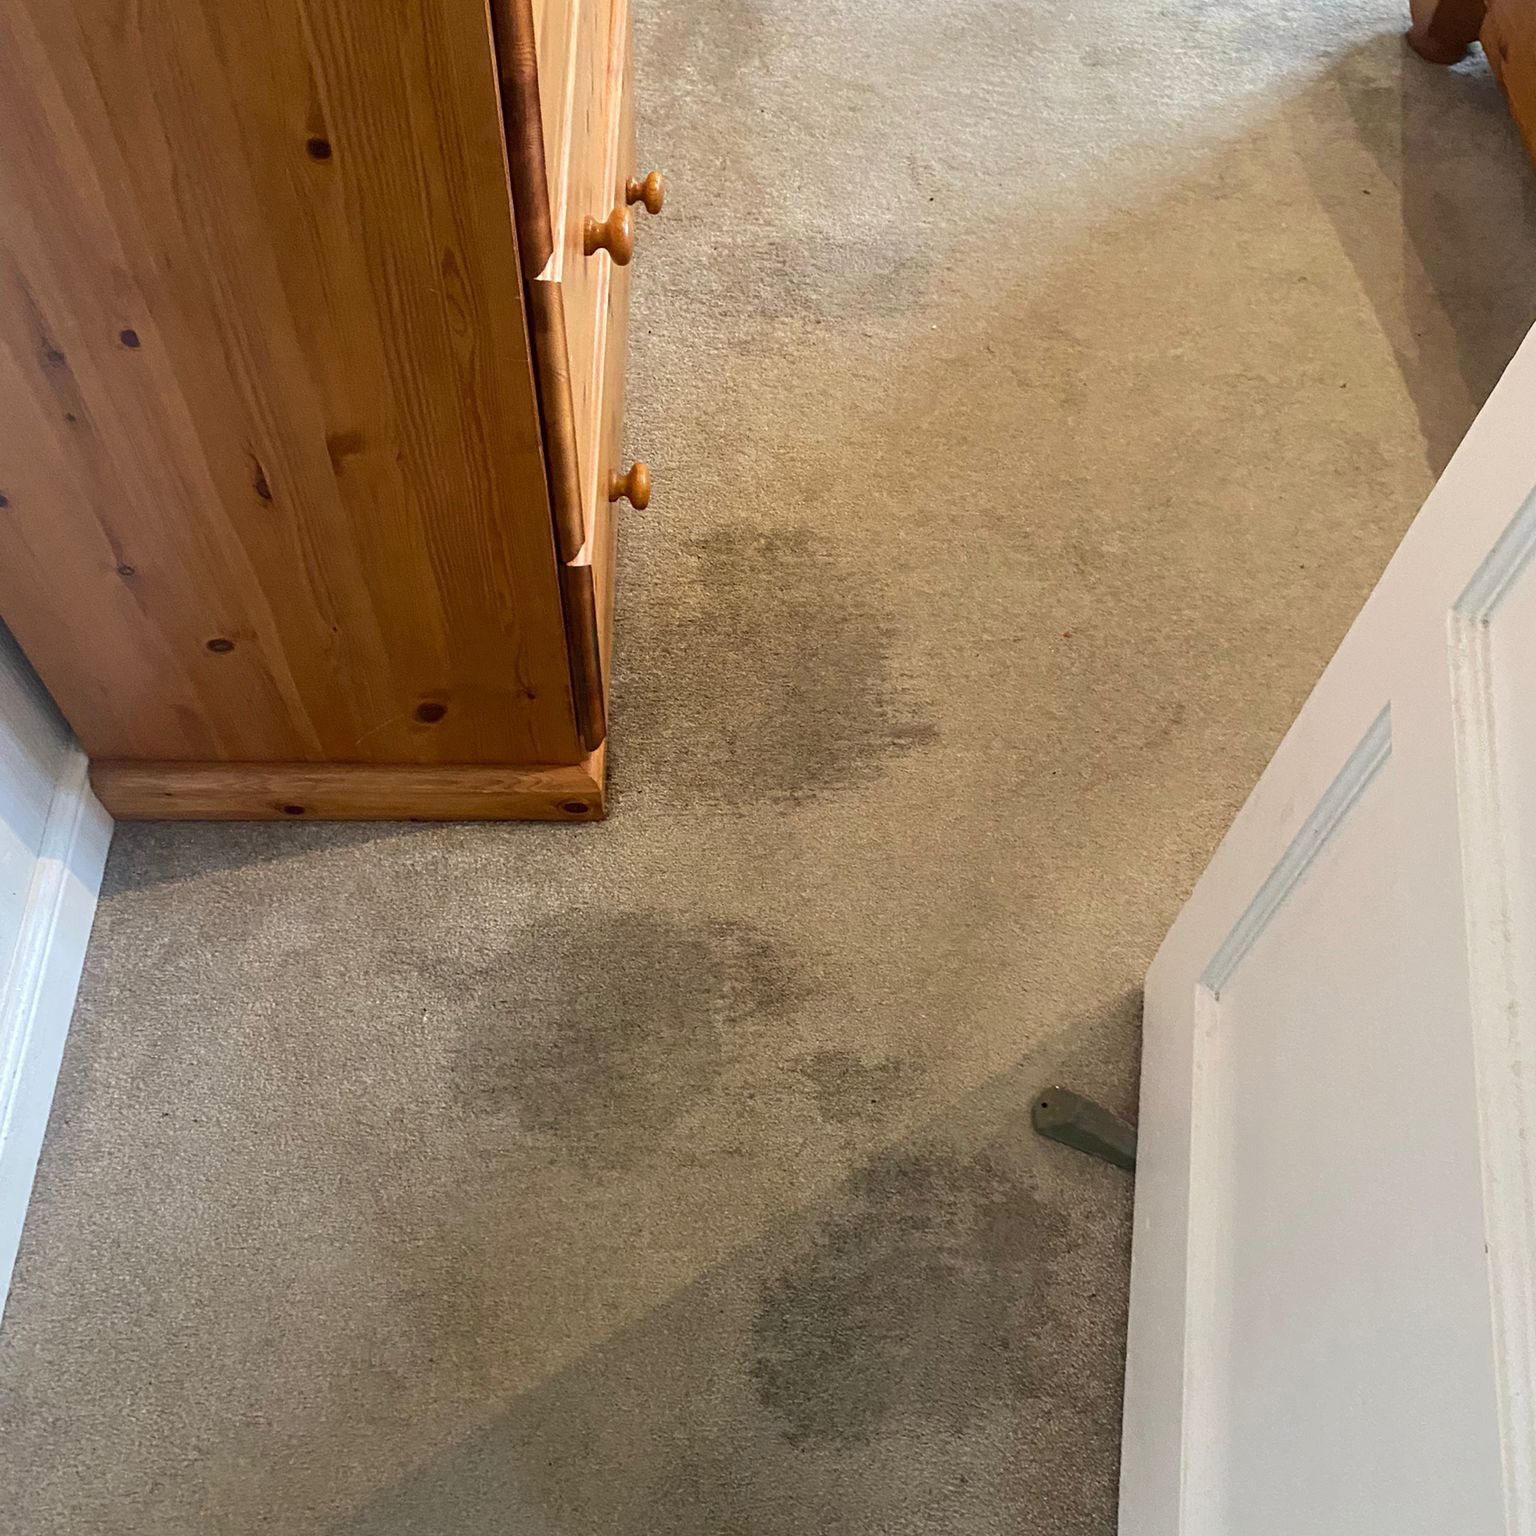 Urine stains on carpet